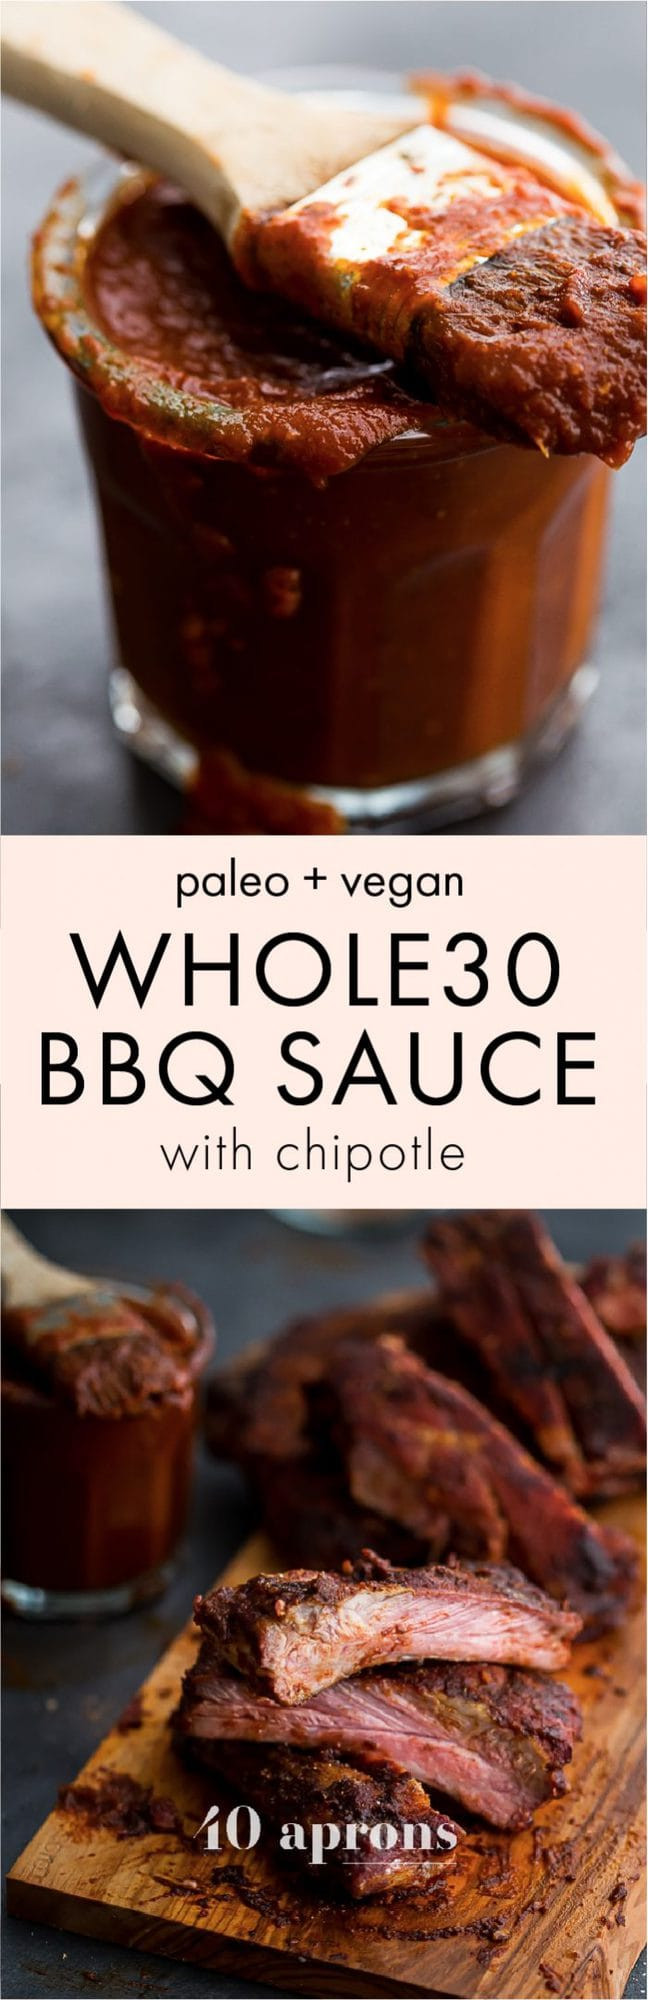 Whole 30 Sauces
 Whole30 BBQ Sauce With Chipotle Paleo Vegan 40 Aprons